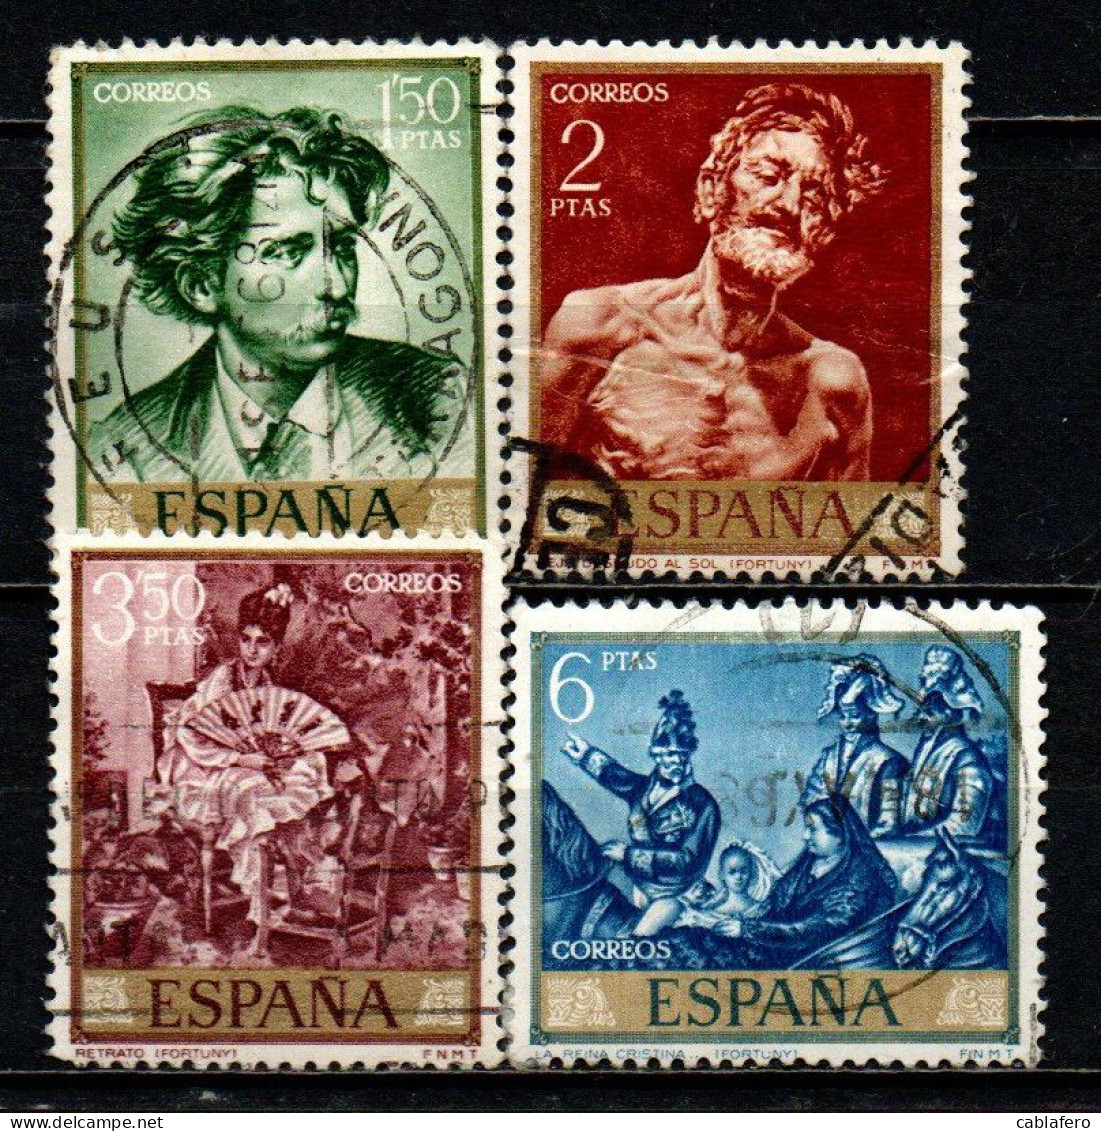 SPAGNA - 1968 - DIPINTI DI MARIANO FORTUNY MARSAL - USATI - Usados